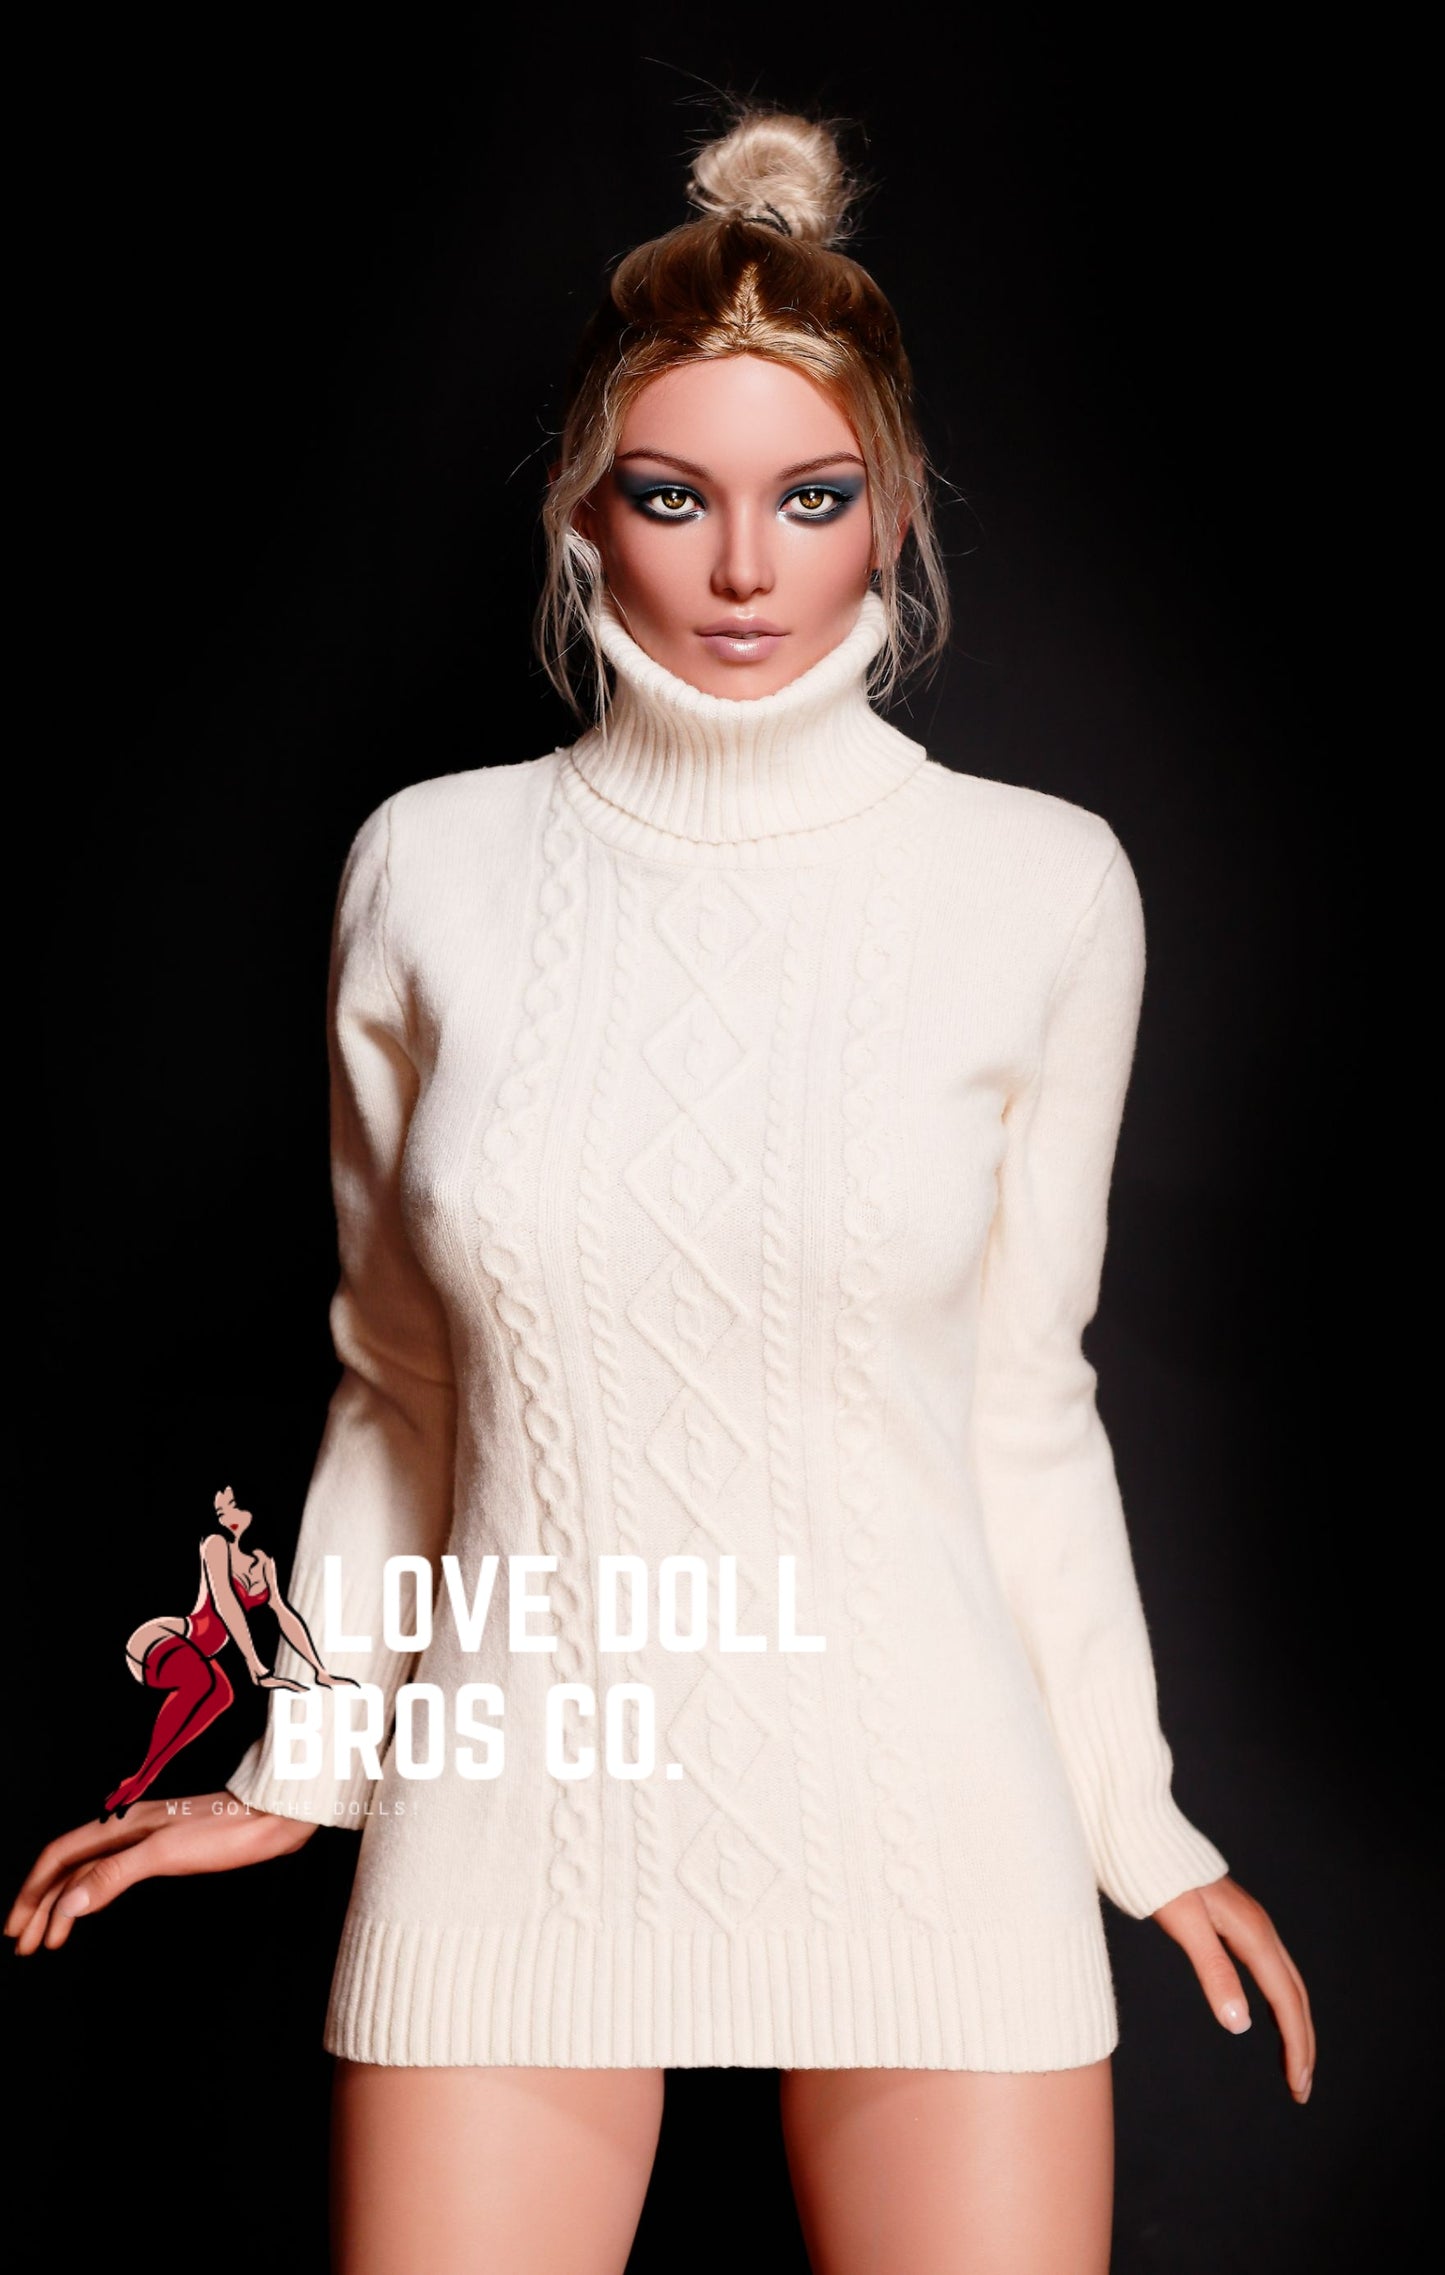 SCARLETT 170CM - Love Doll Bros Co.